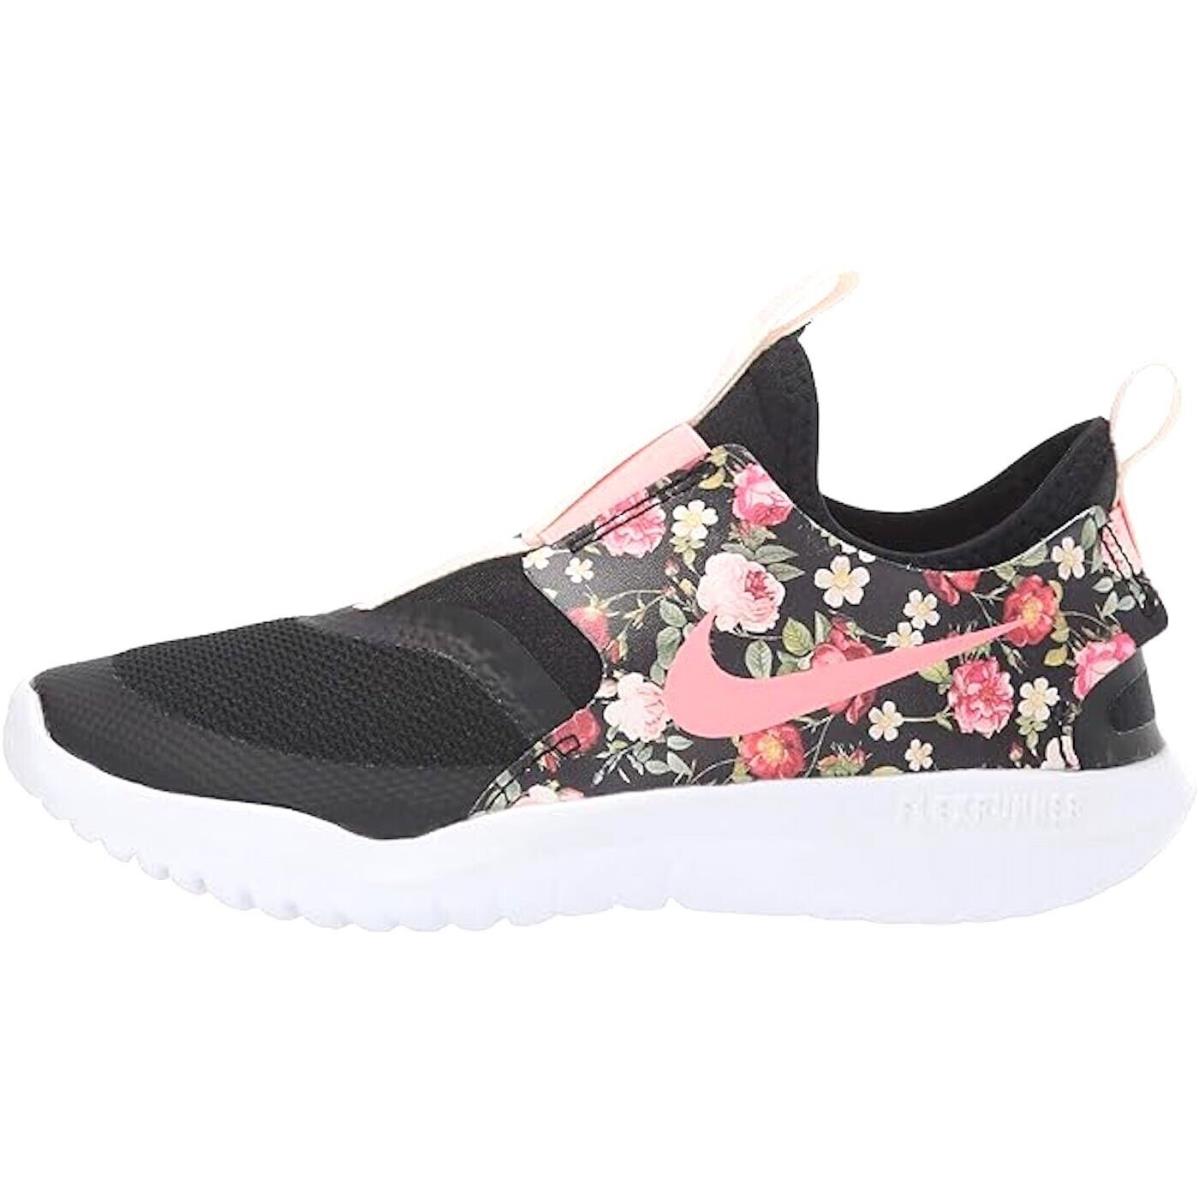 Nike Flex Runner VF PS Small Girl Kids Shoe BV1640 001 Size 3 Youth - Black/Pink Tint -White